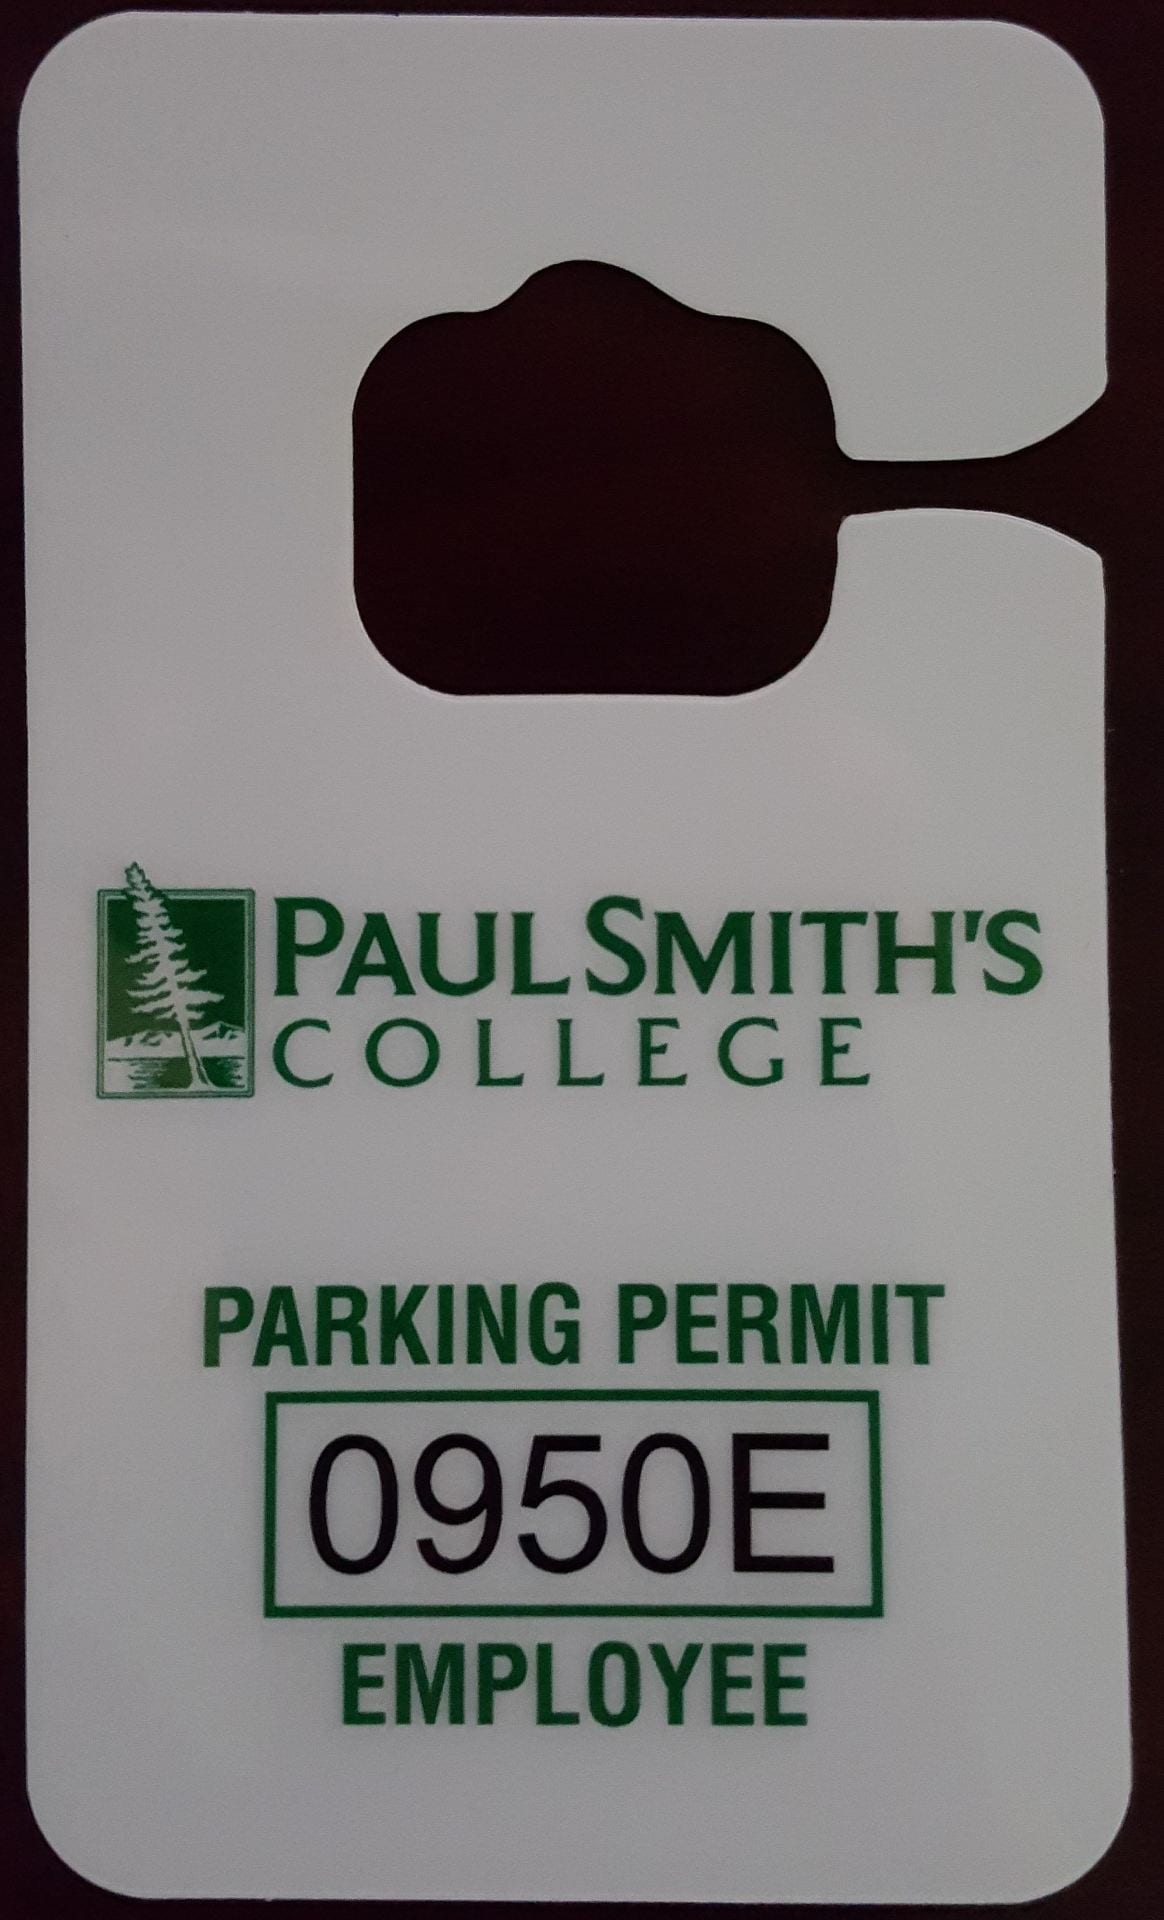 Employee Parking Permit